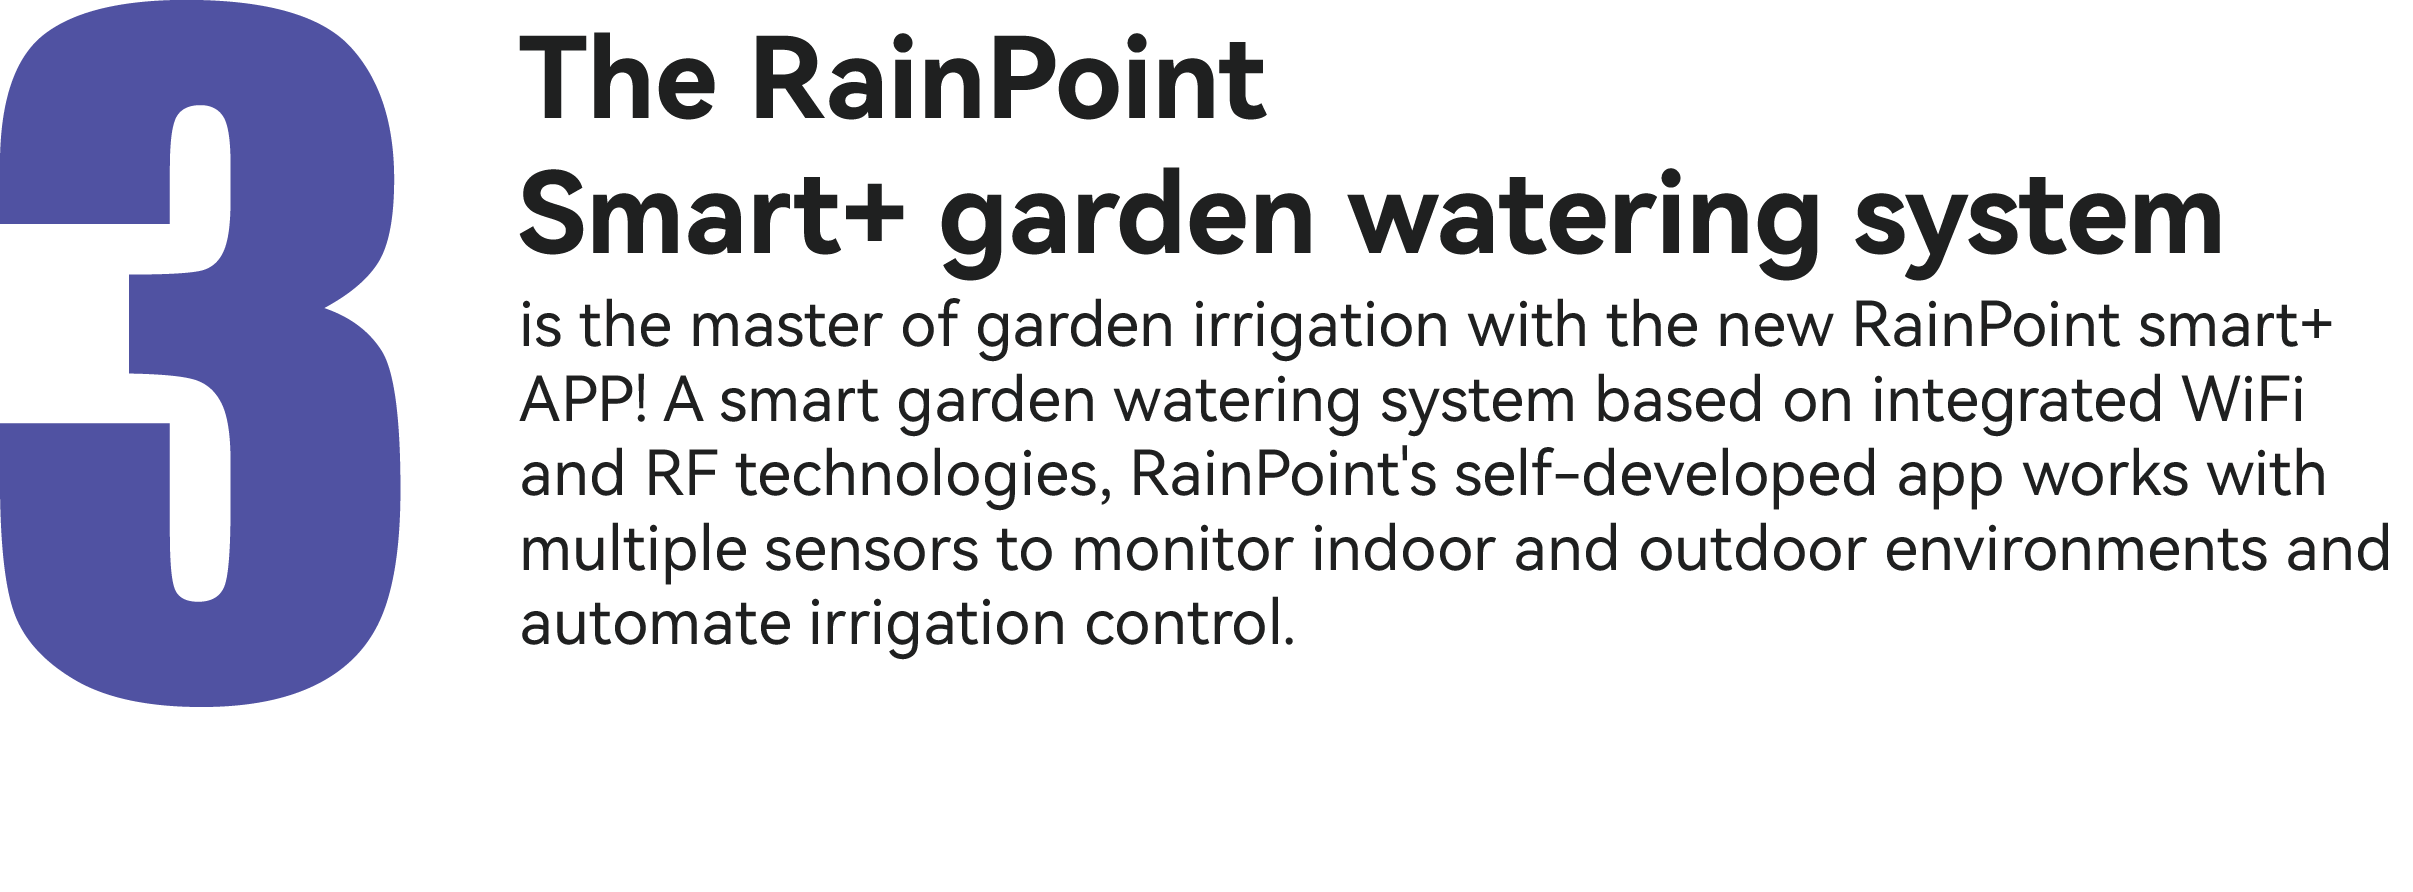 irrigation control